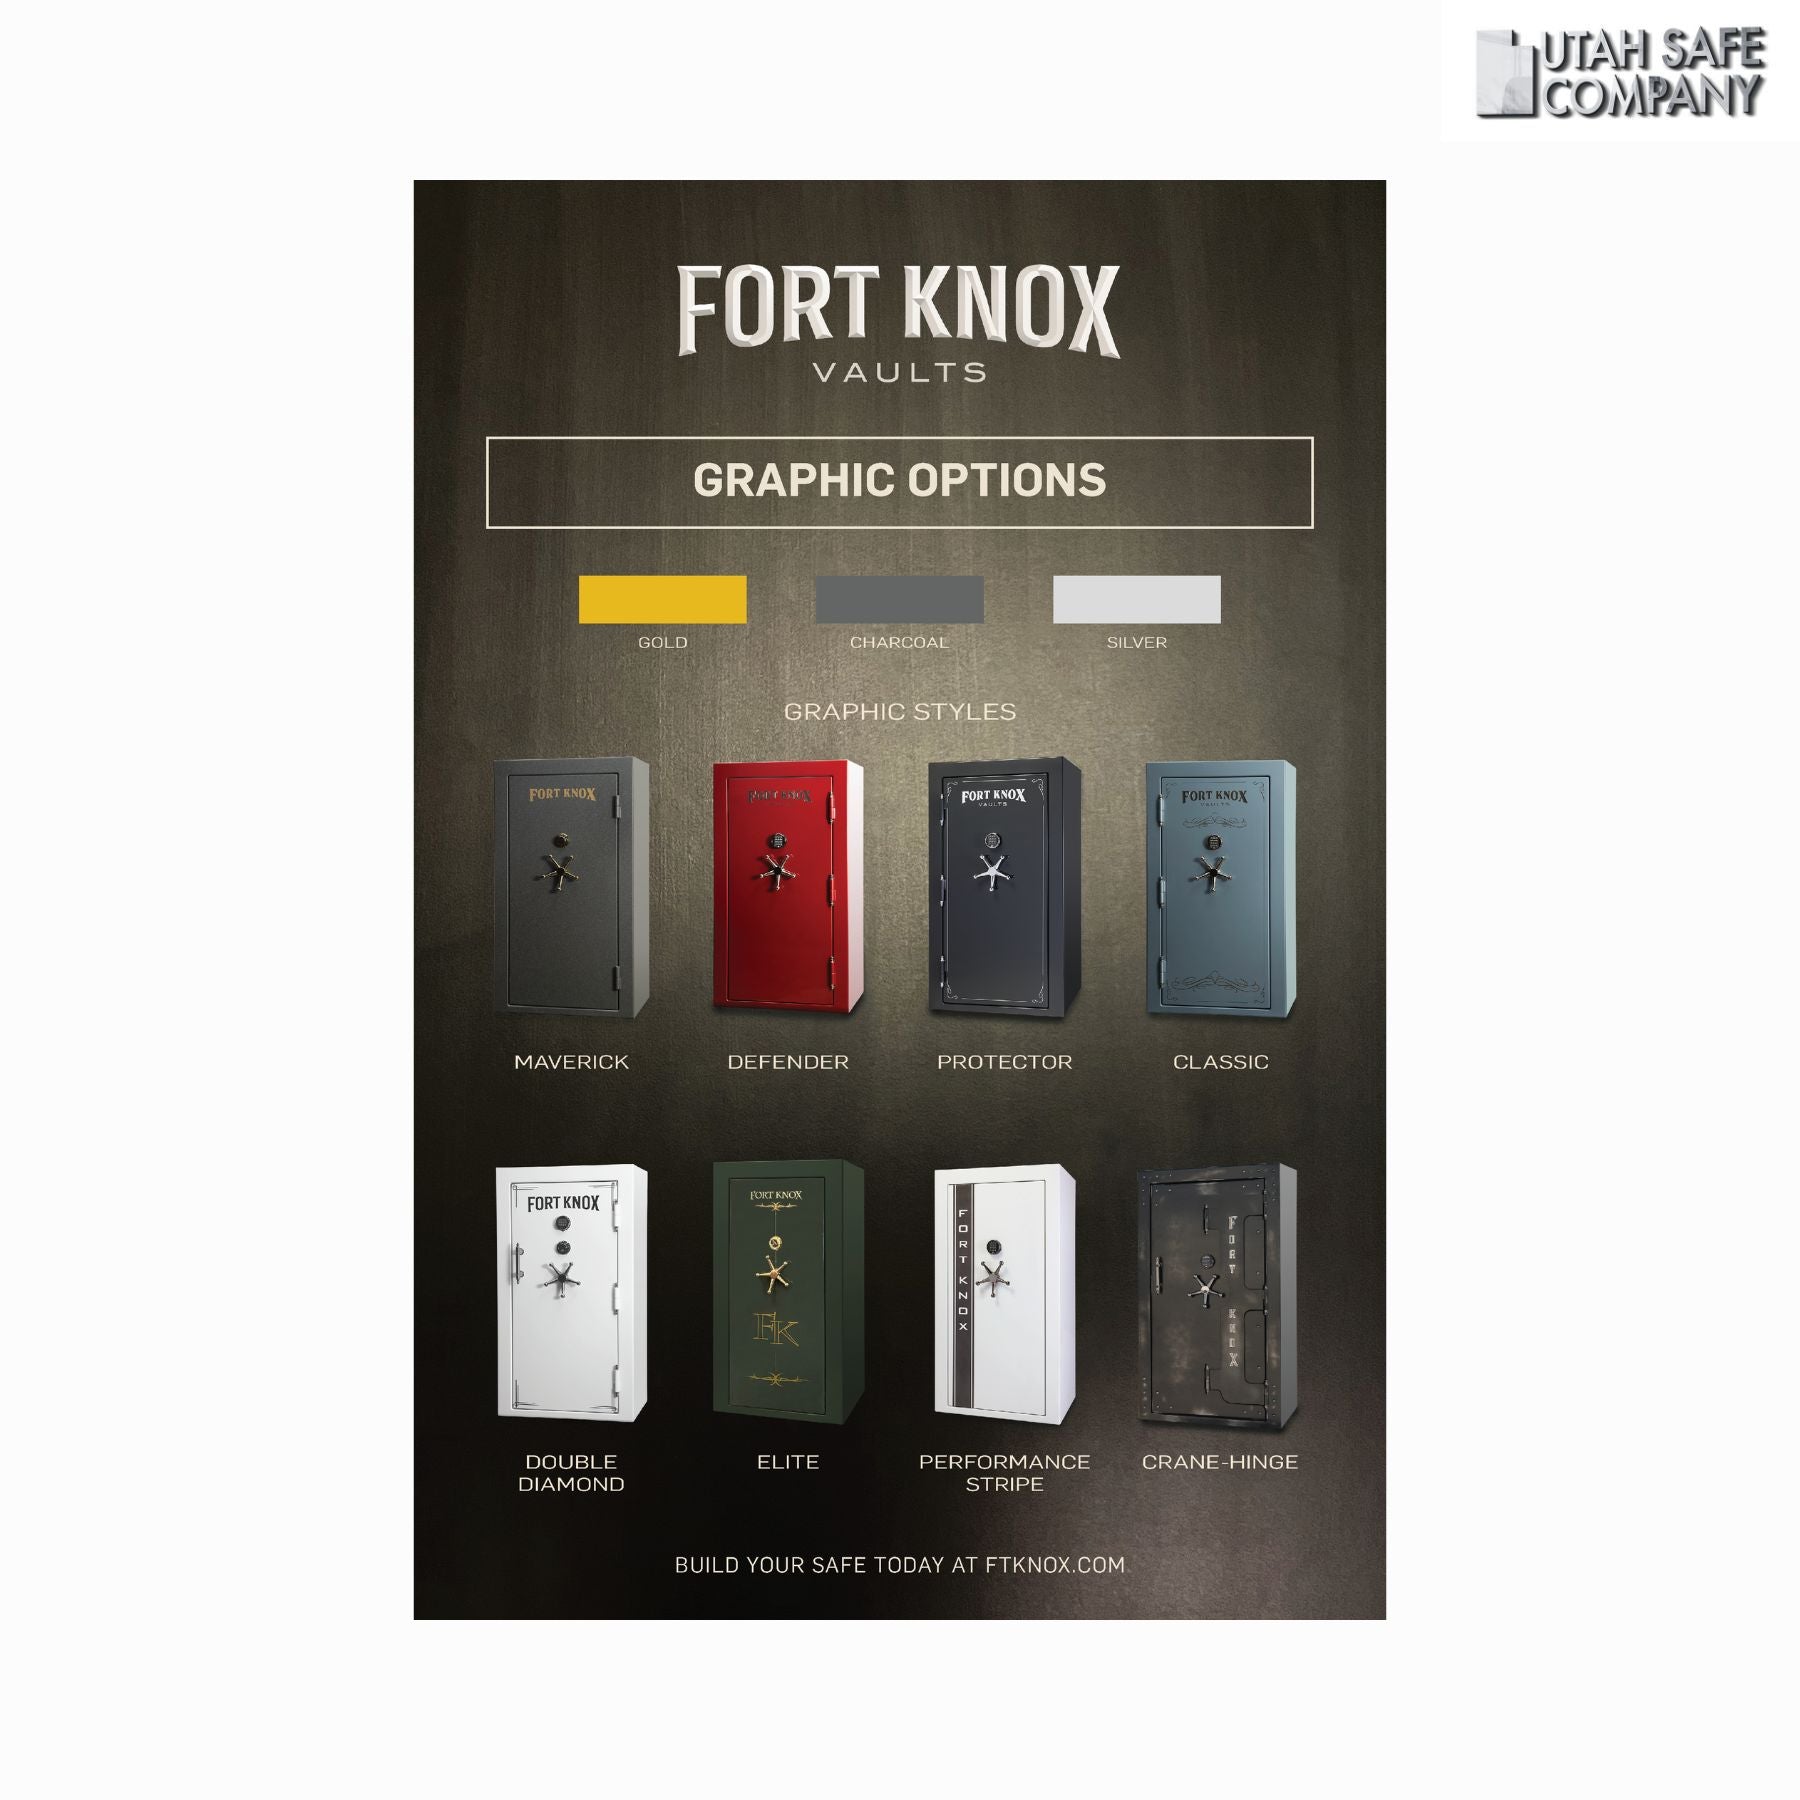 Fort Knox Guardian 6031